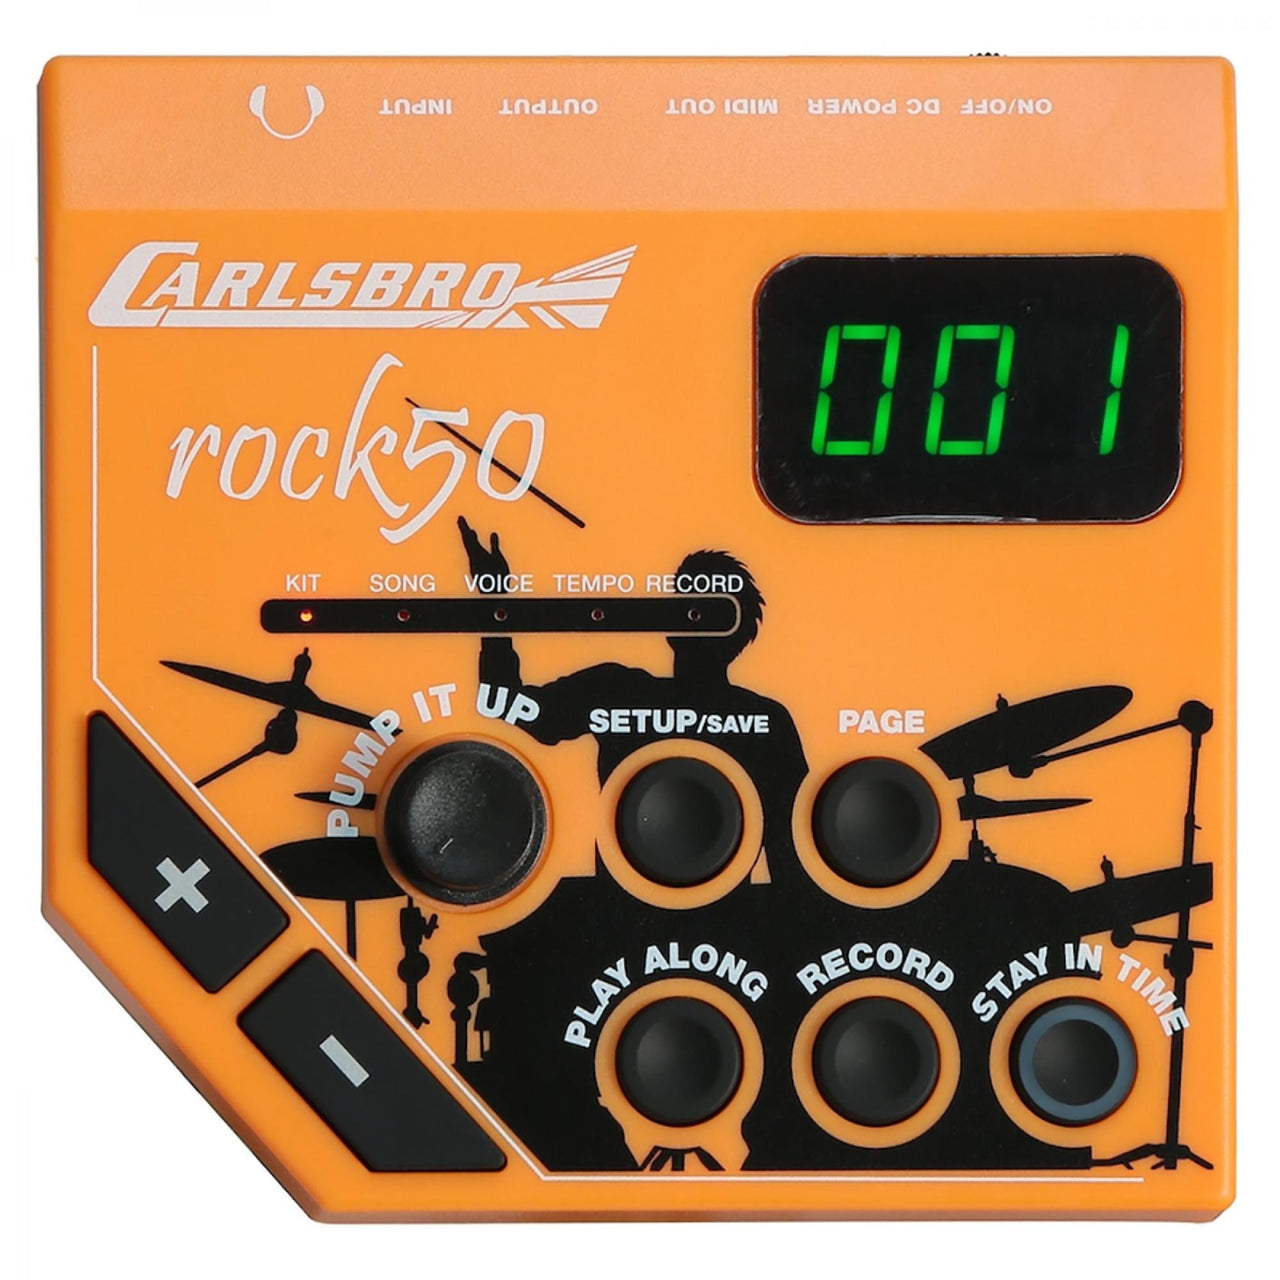 Bateria Carlsbro Rock50bp1 Electrica Digital Electronica